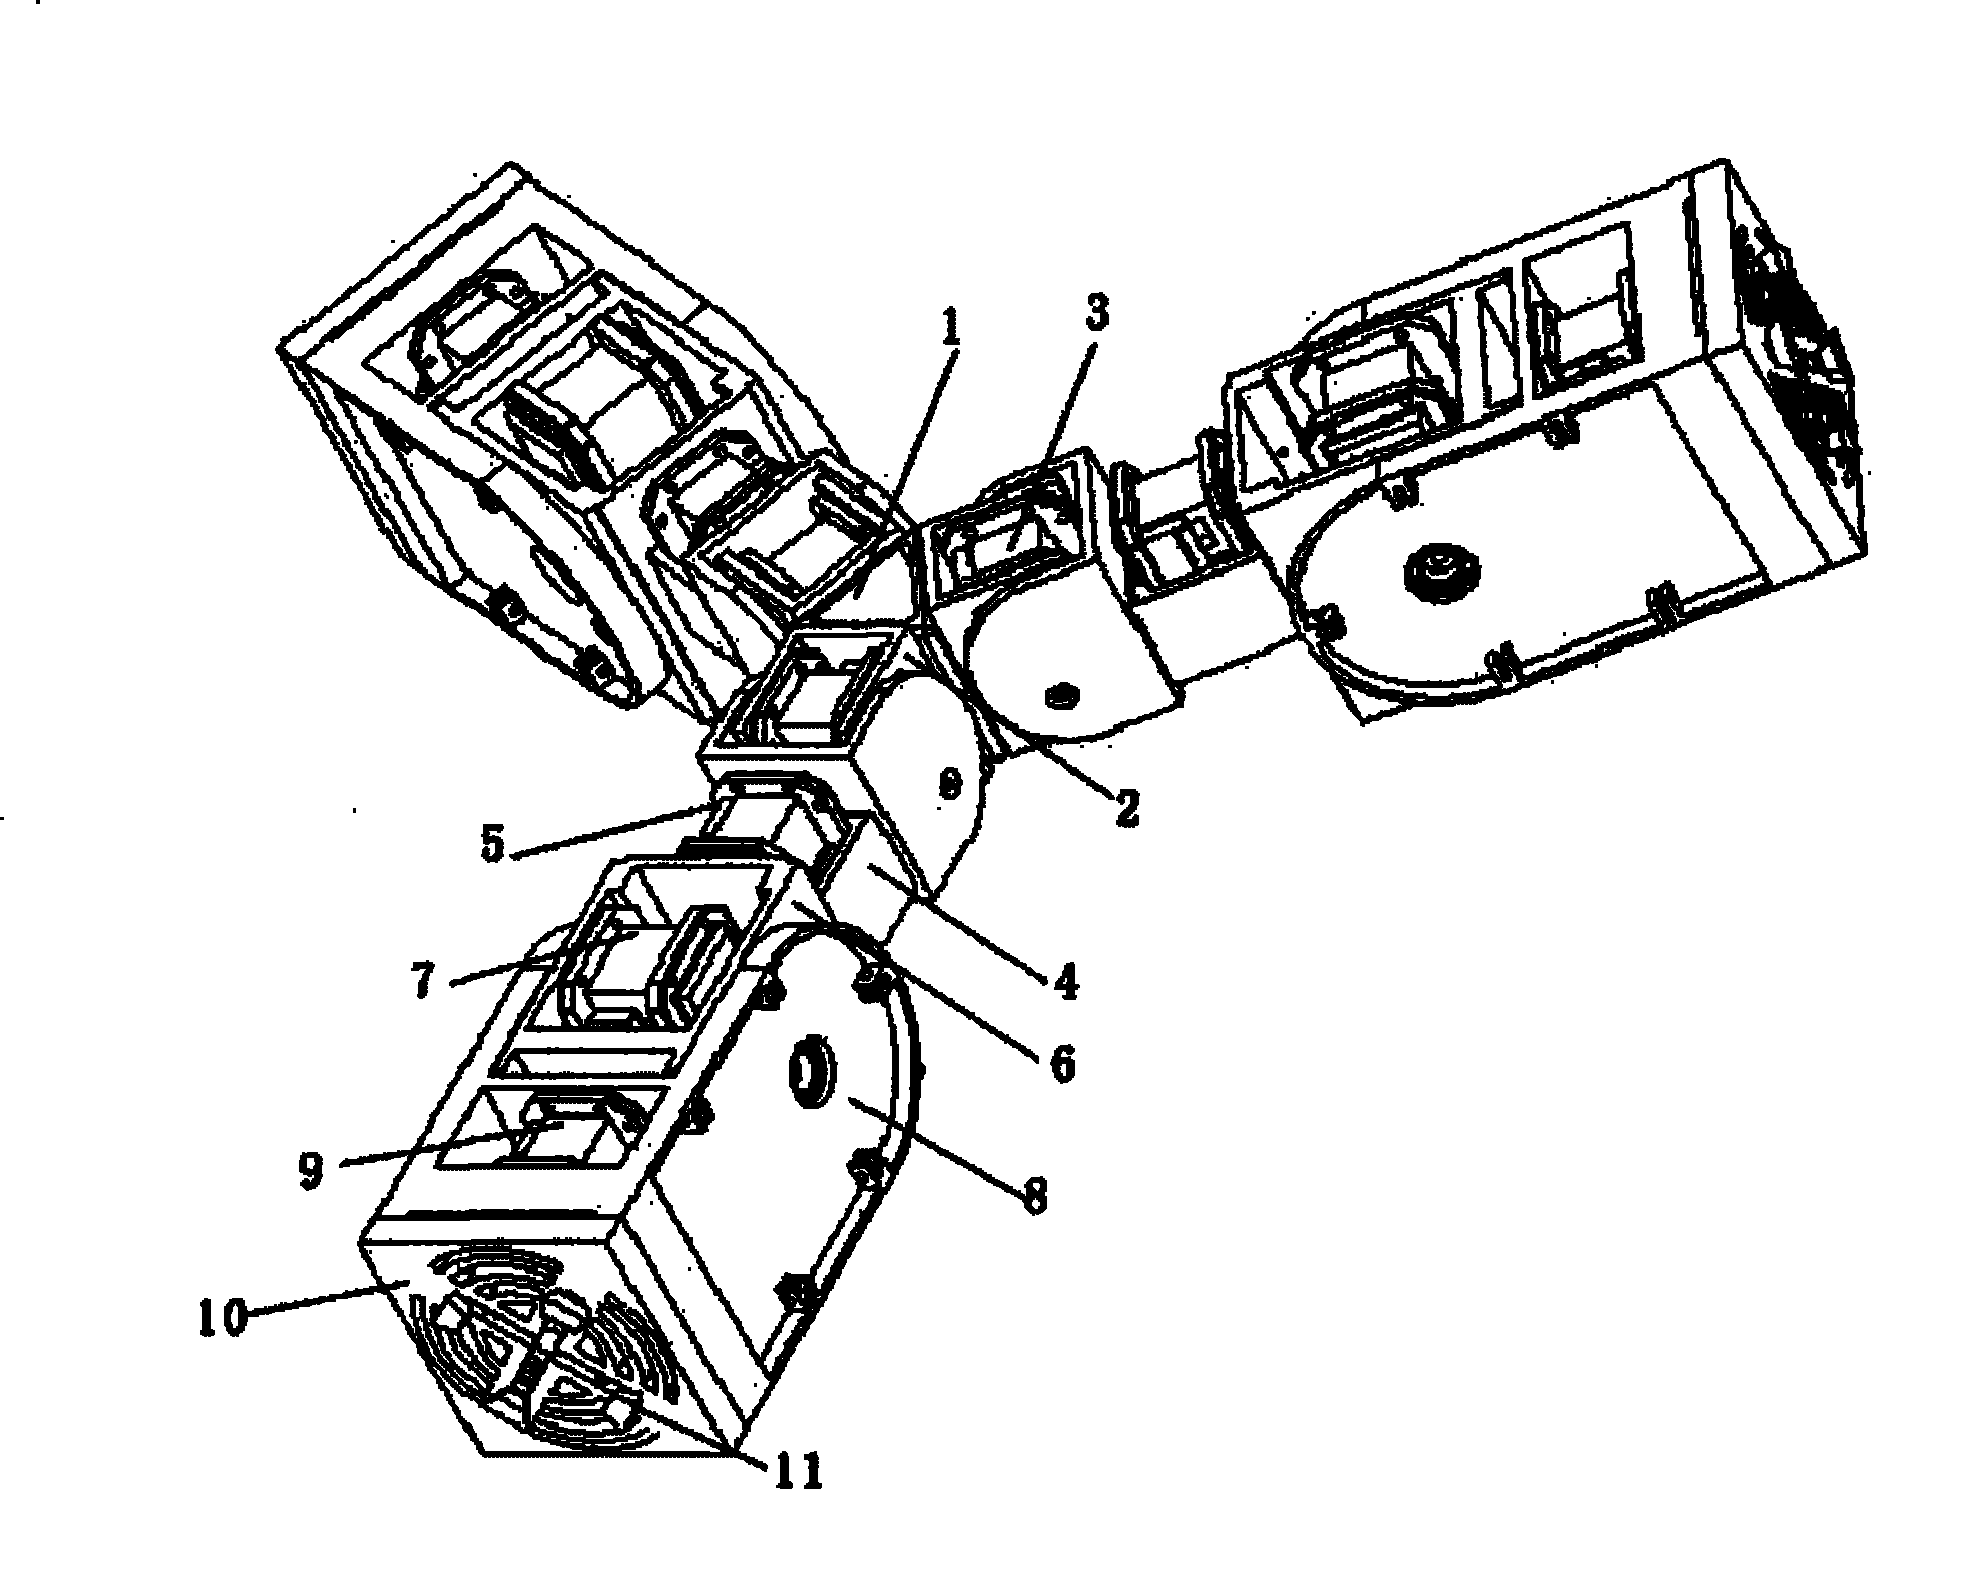 Three-arm buttjunction module flat lattice type self-reorganization robot